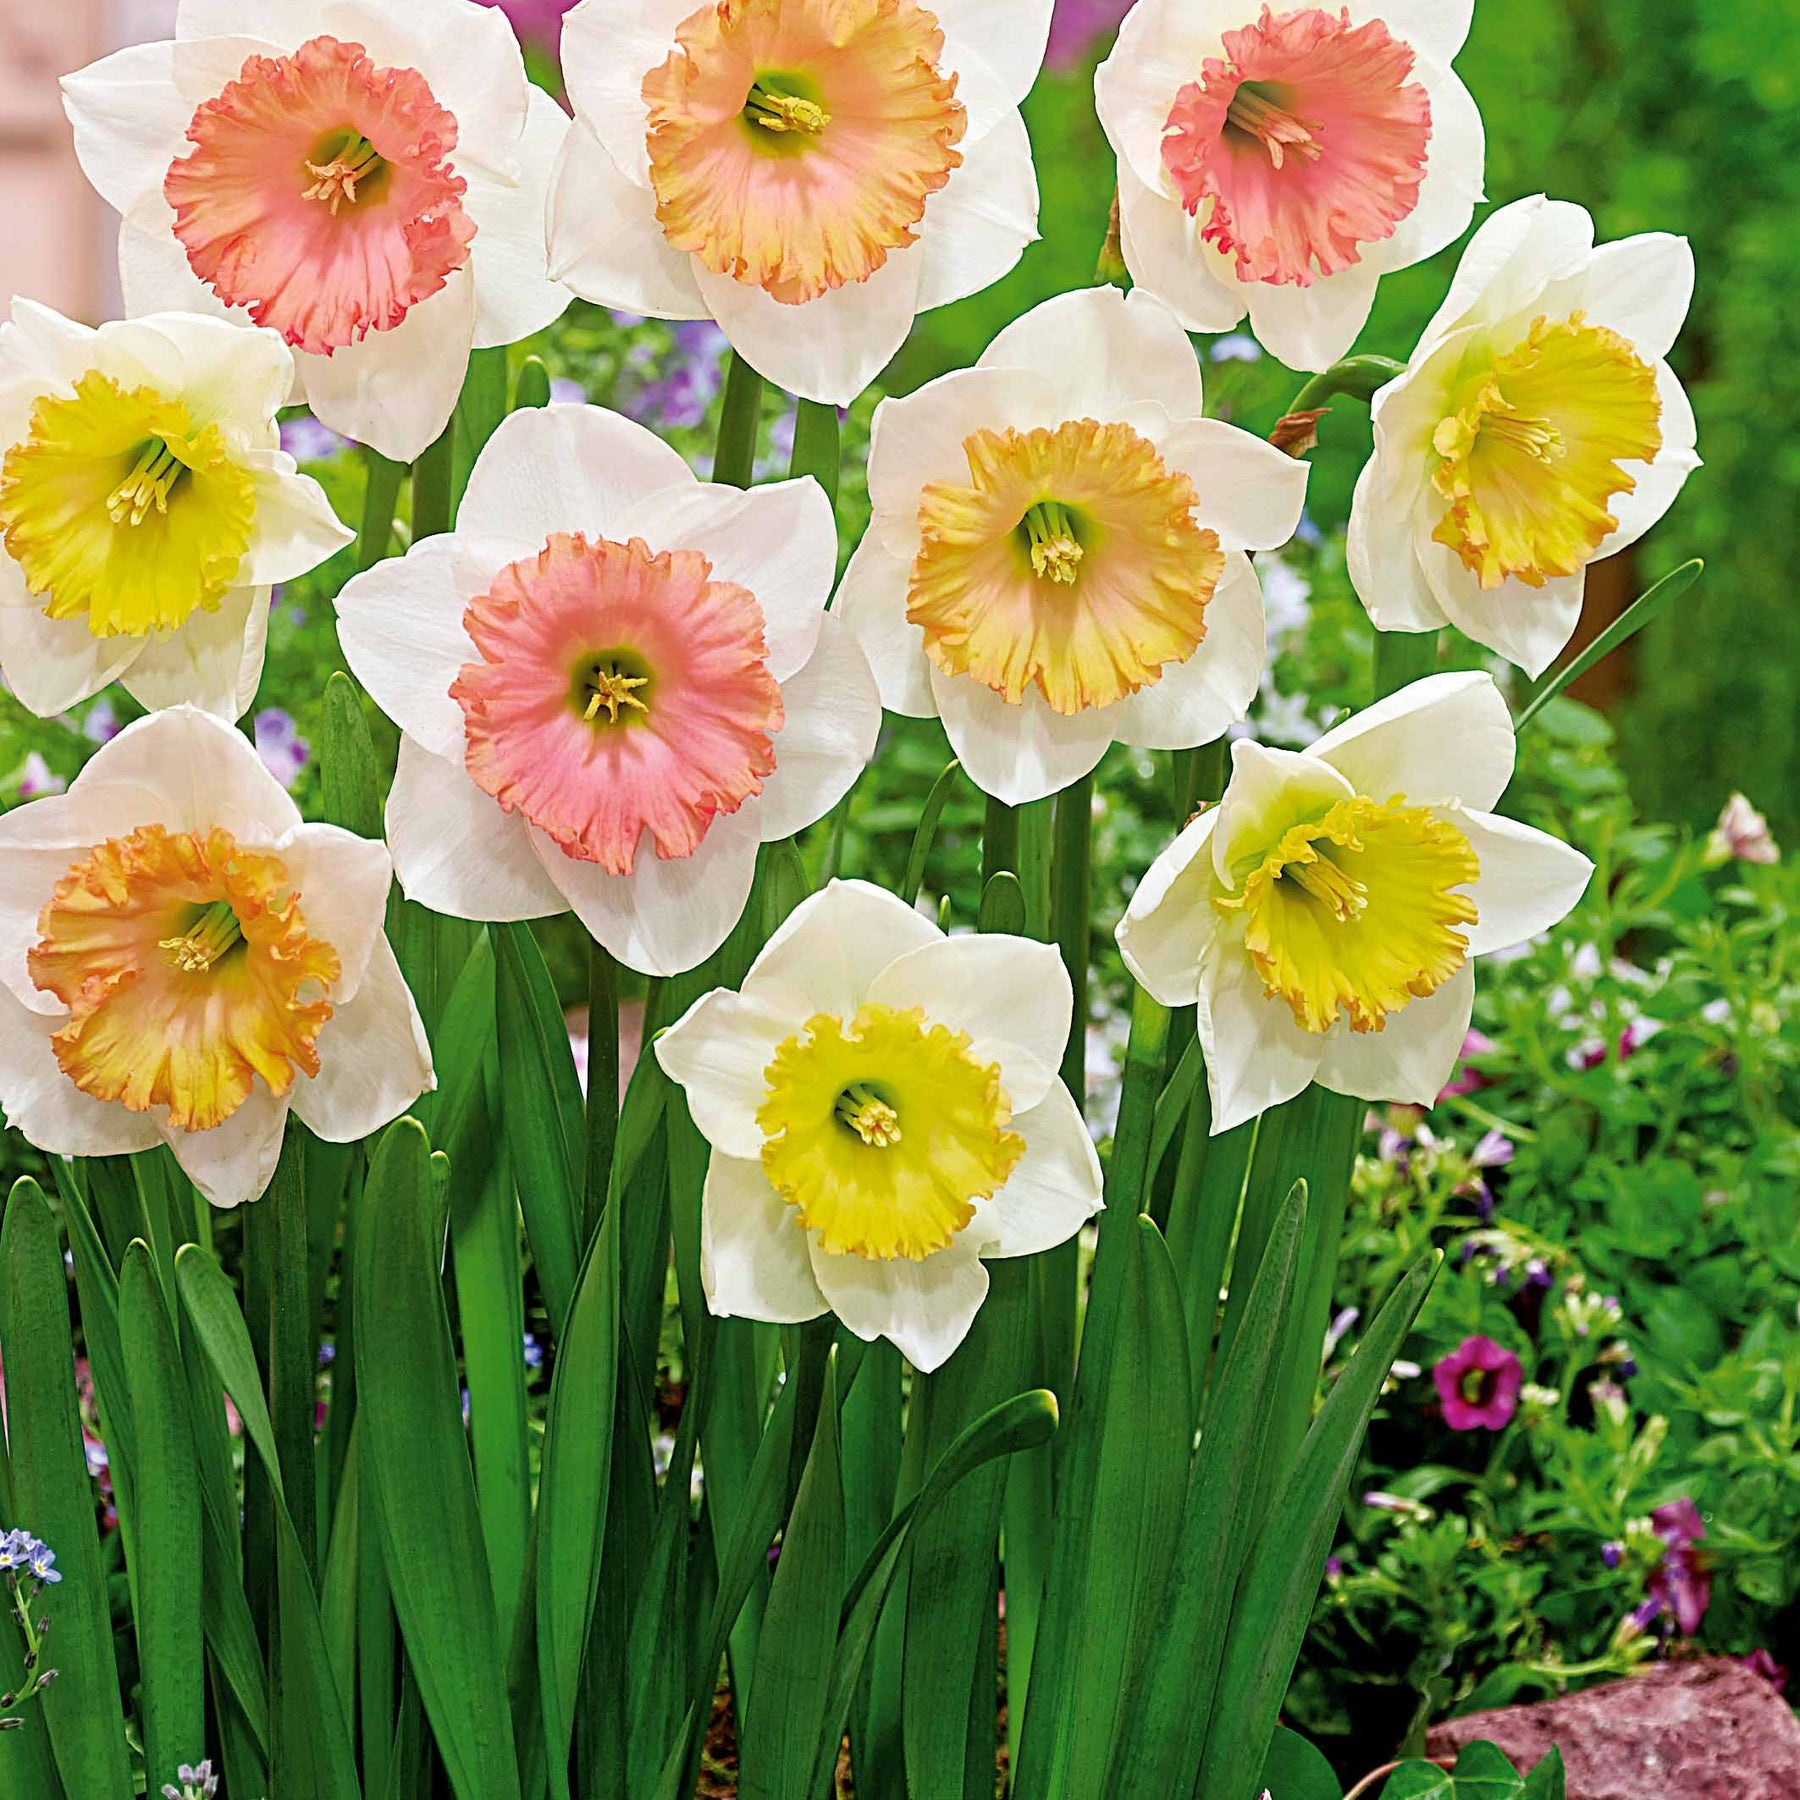 10 Narcisses Sentinelle - Narcissus sentinelle - Plantes